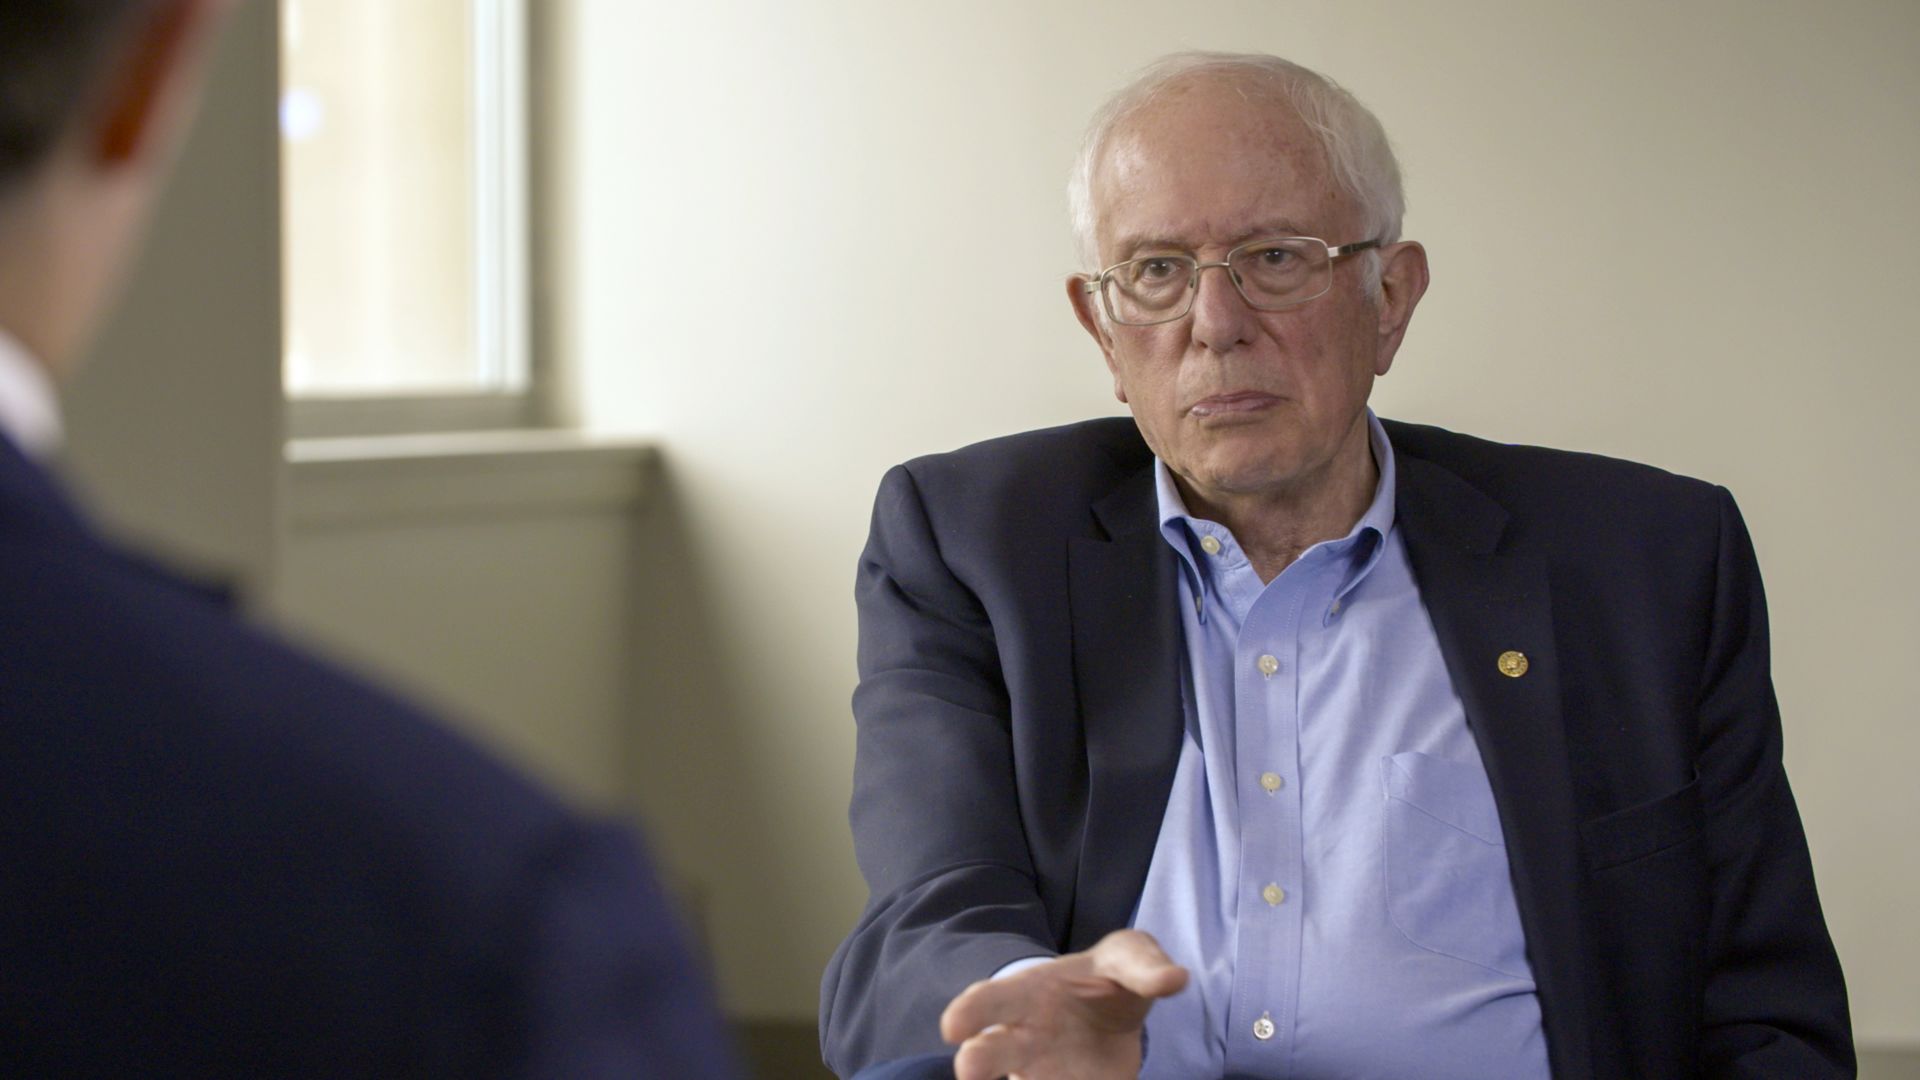 Sen. Bernie Sanders is seen during an interview with 